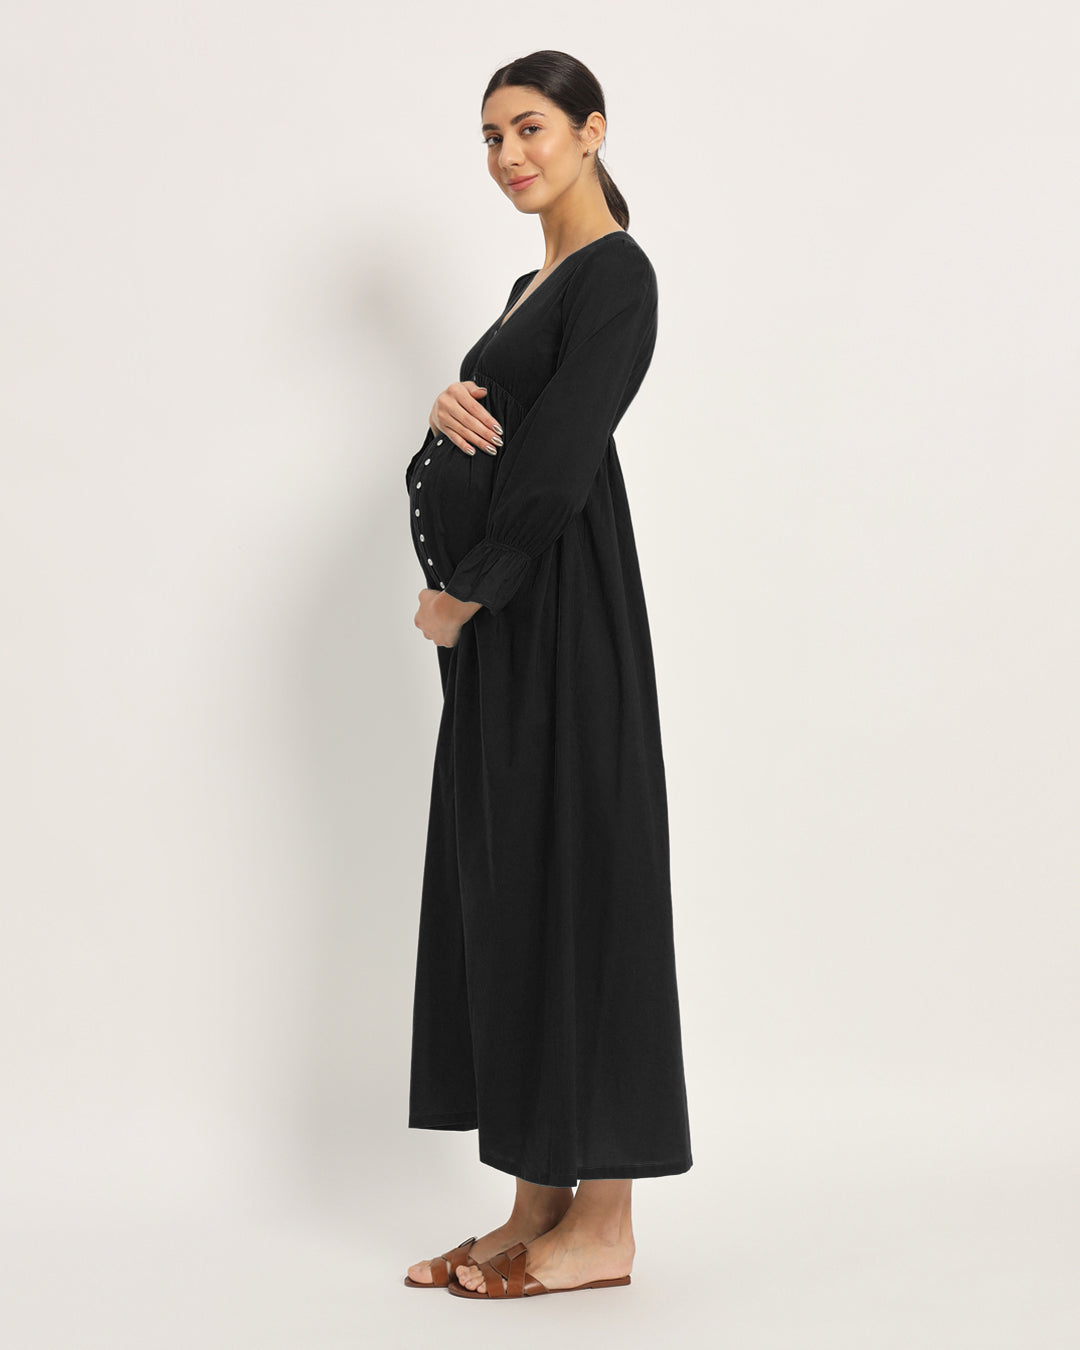 Combo: Black & Sage Green Glowing Bellies Maternity & Nursing Dress